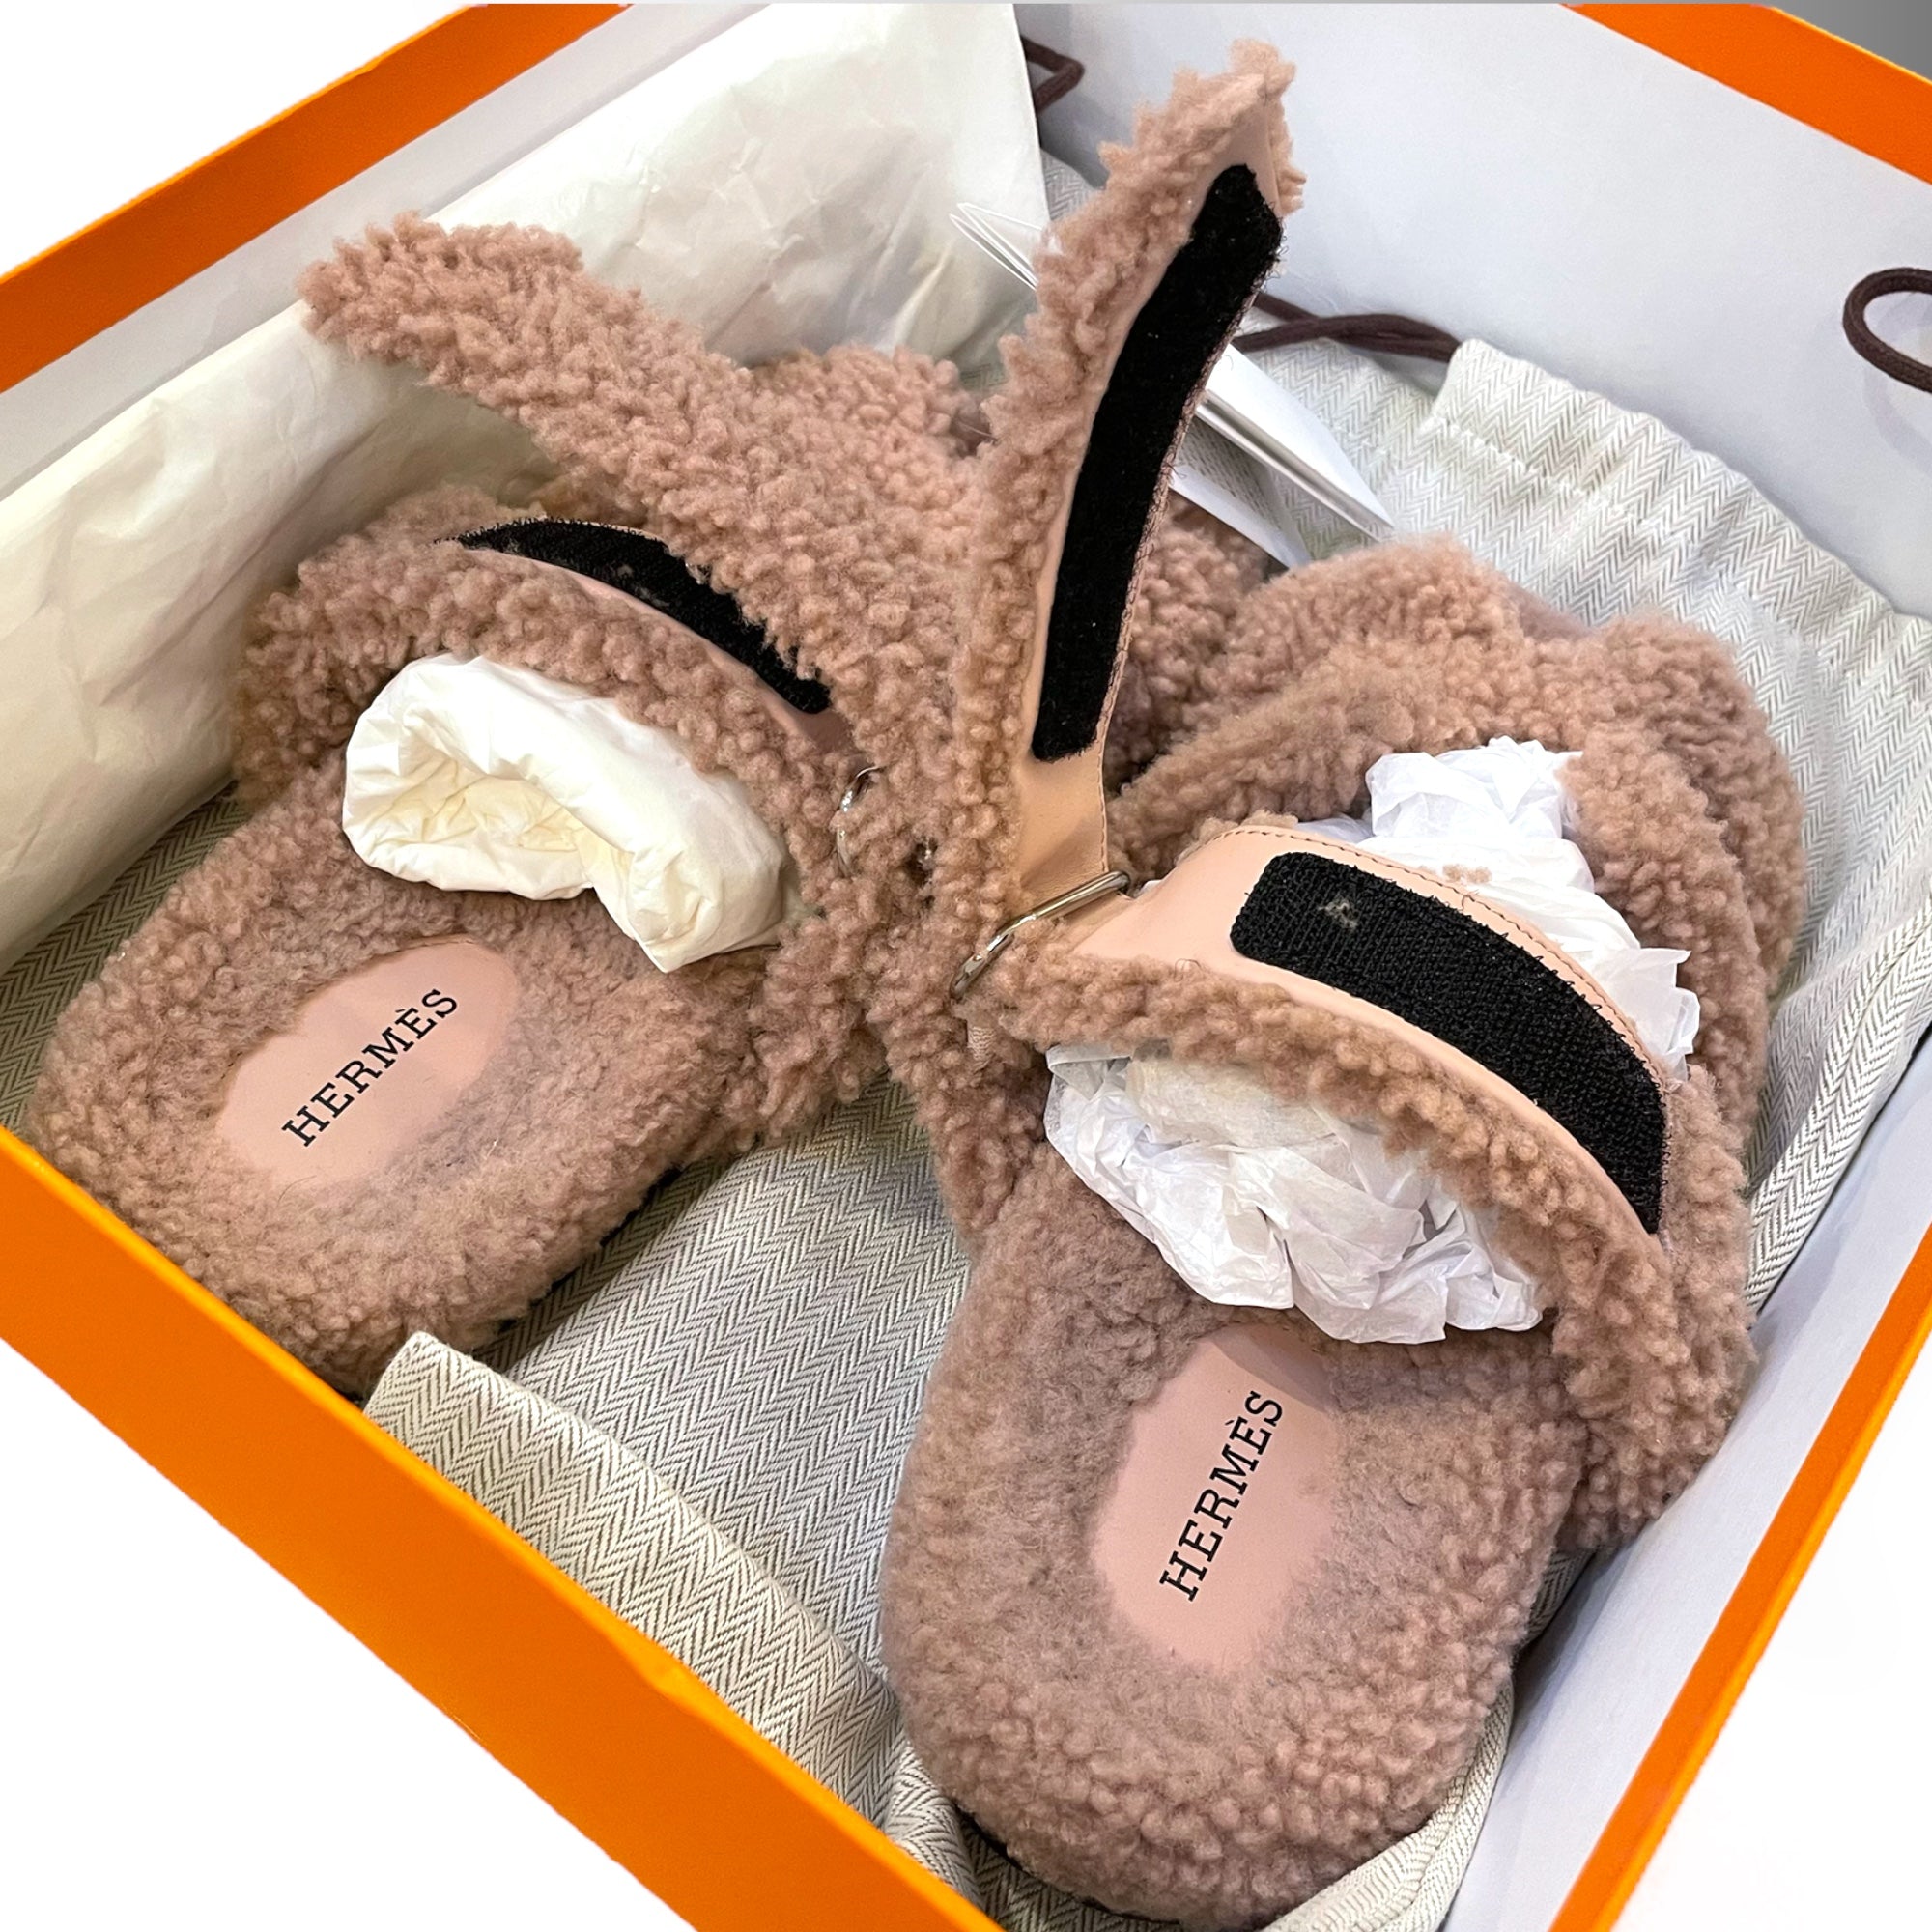 HERMÈS Woman’s Chypre Shearling Sandals |Size: US 8.5 | IT 38.5|